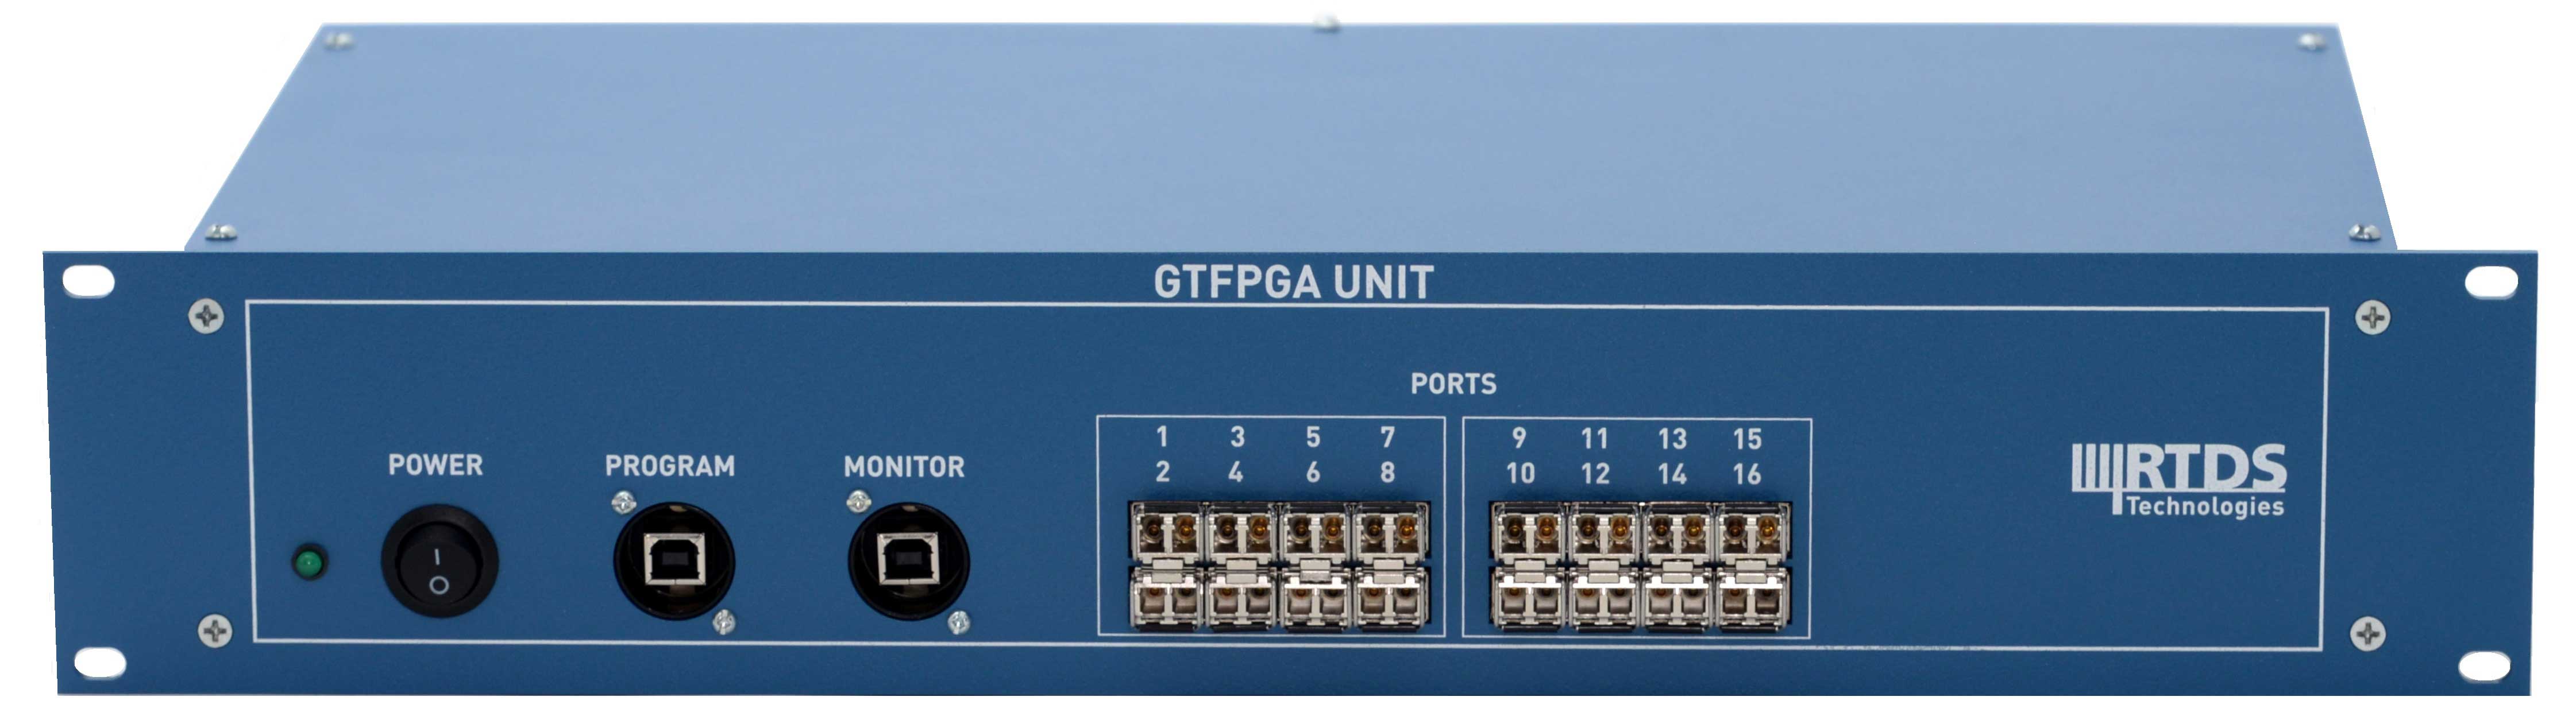 GTFPGA-fibreC.jpg